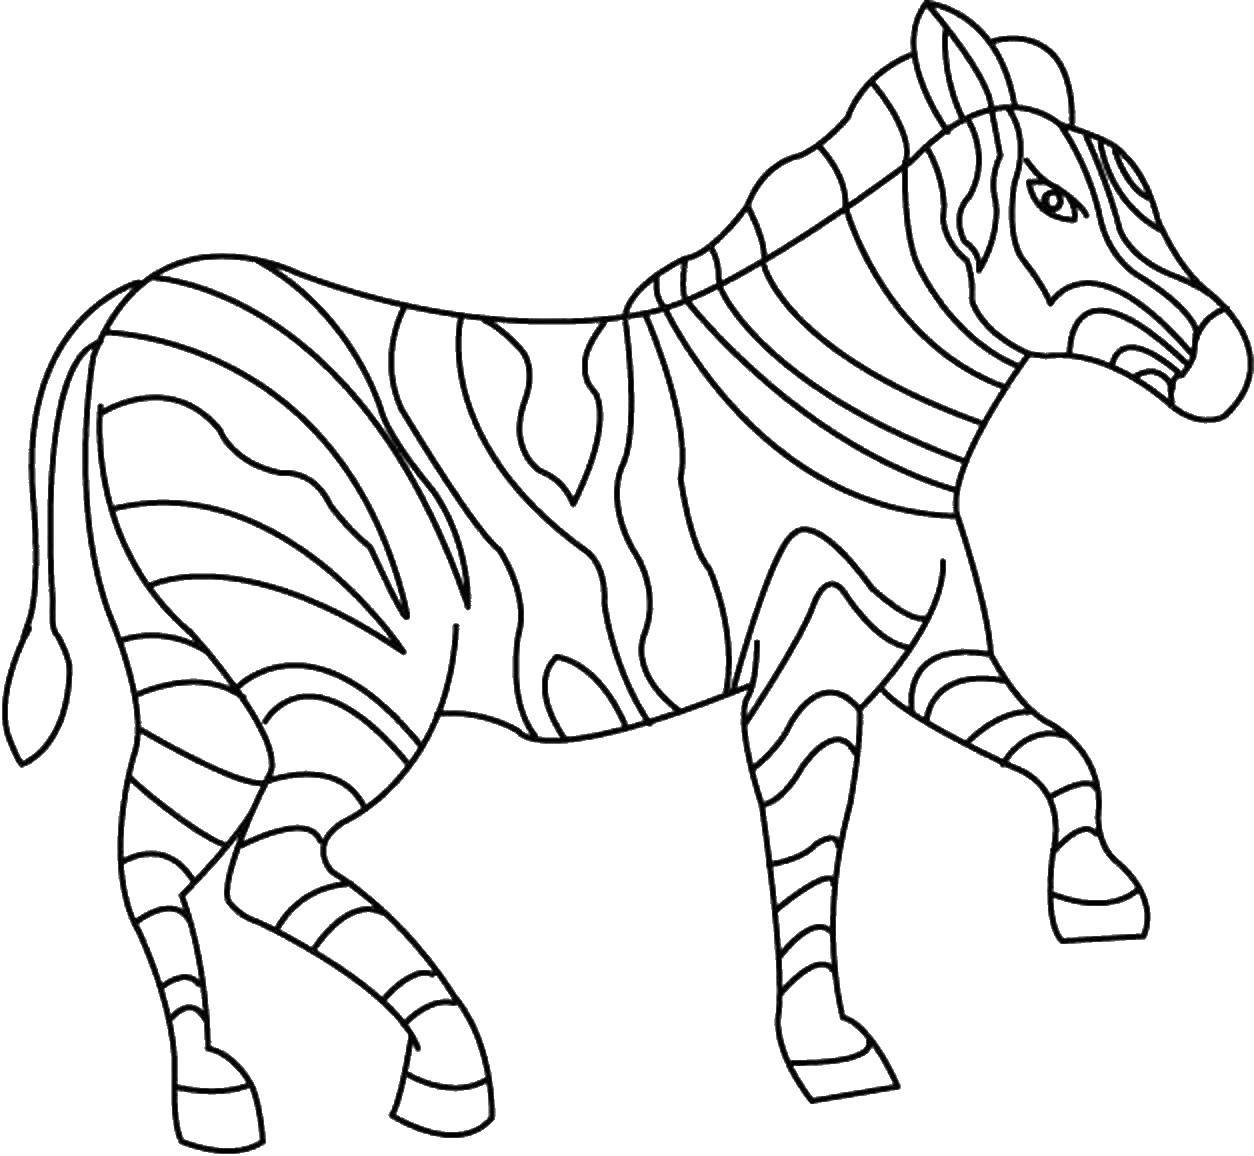 Coloring Zebra. Category Animals. Tags:  Zebra .